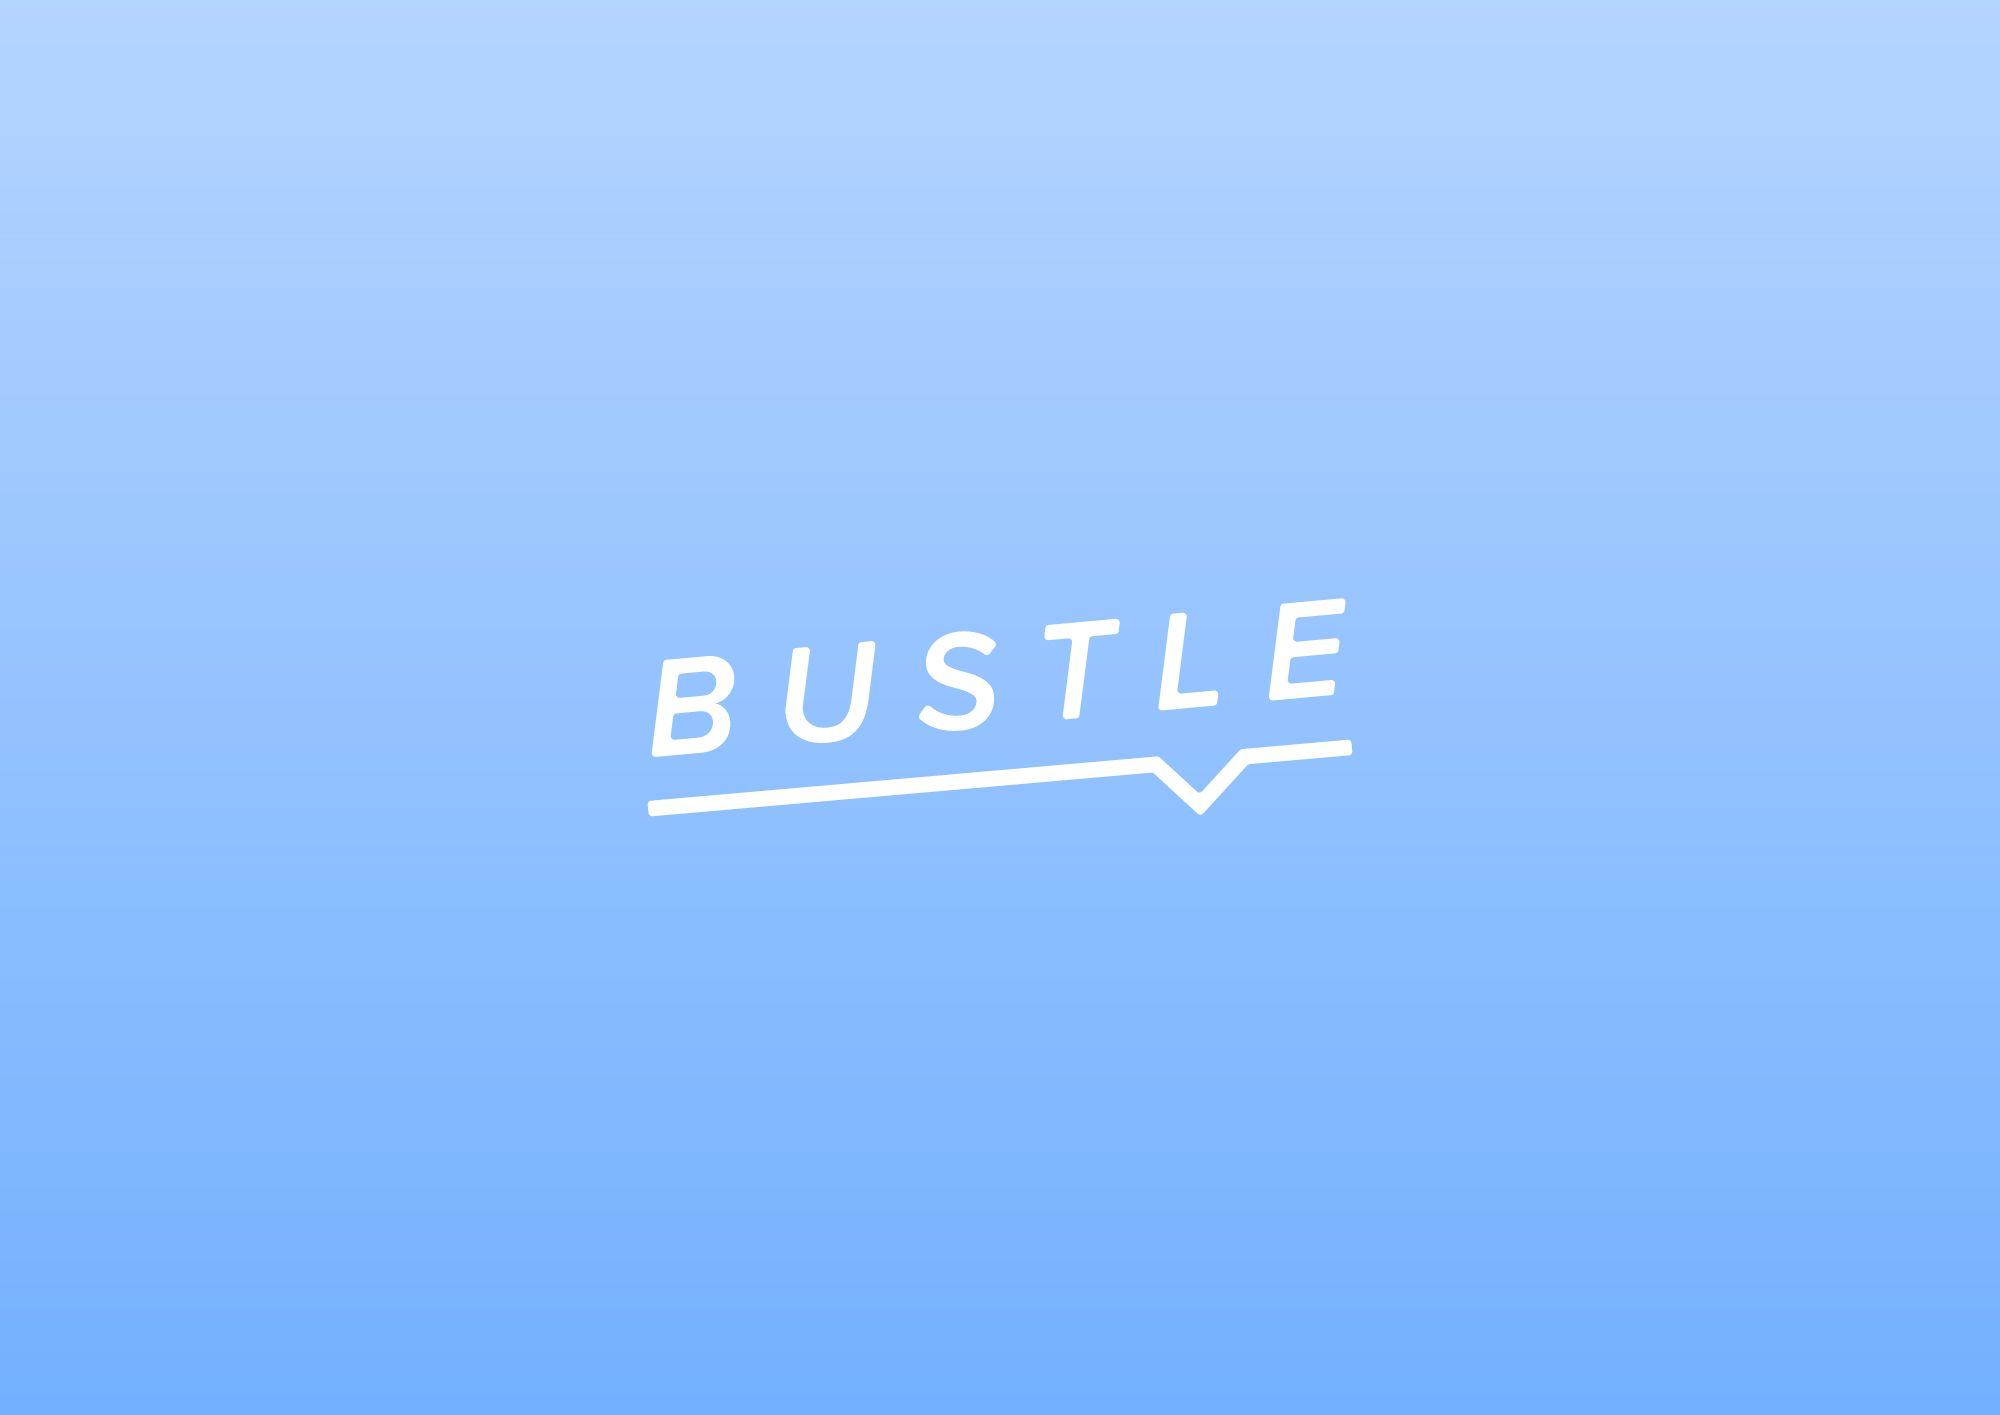 Bustle Logo - Bustle